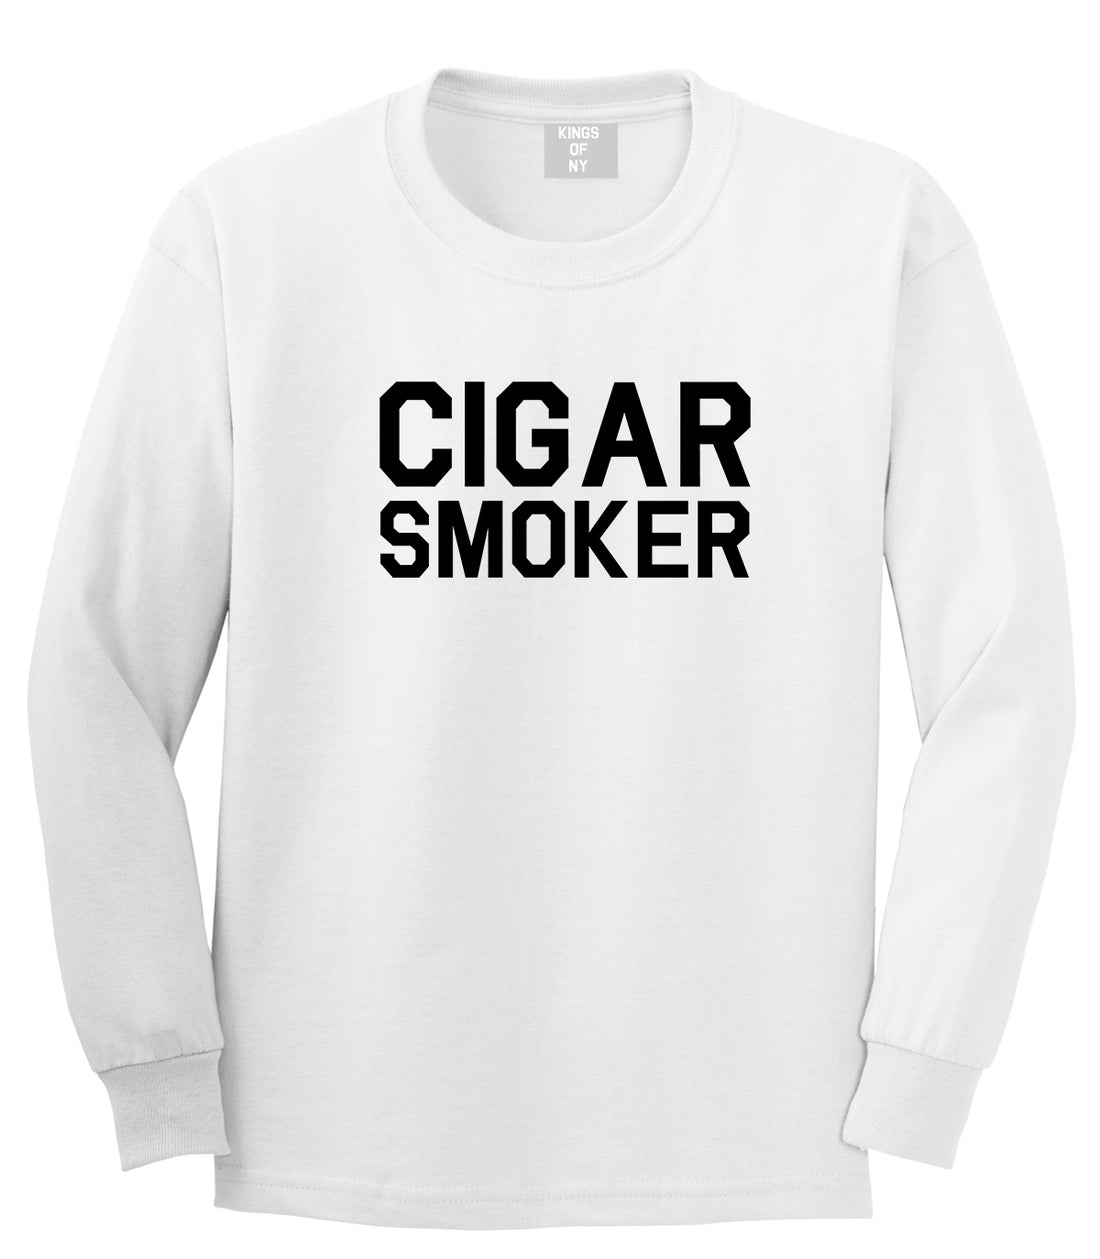 Cigar Smoker White Long Sleeve T-Shirt by Kings Of NY